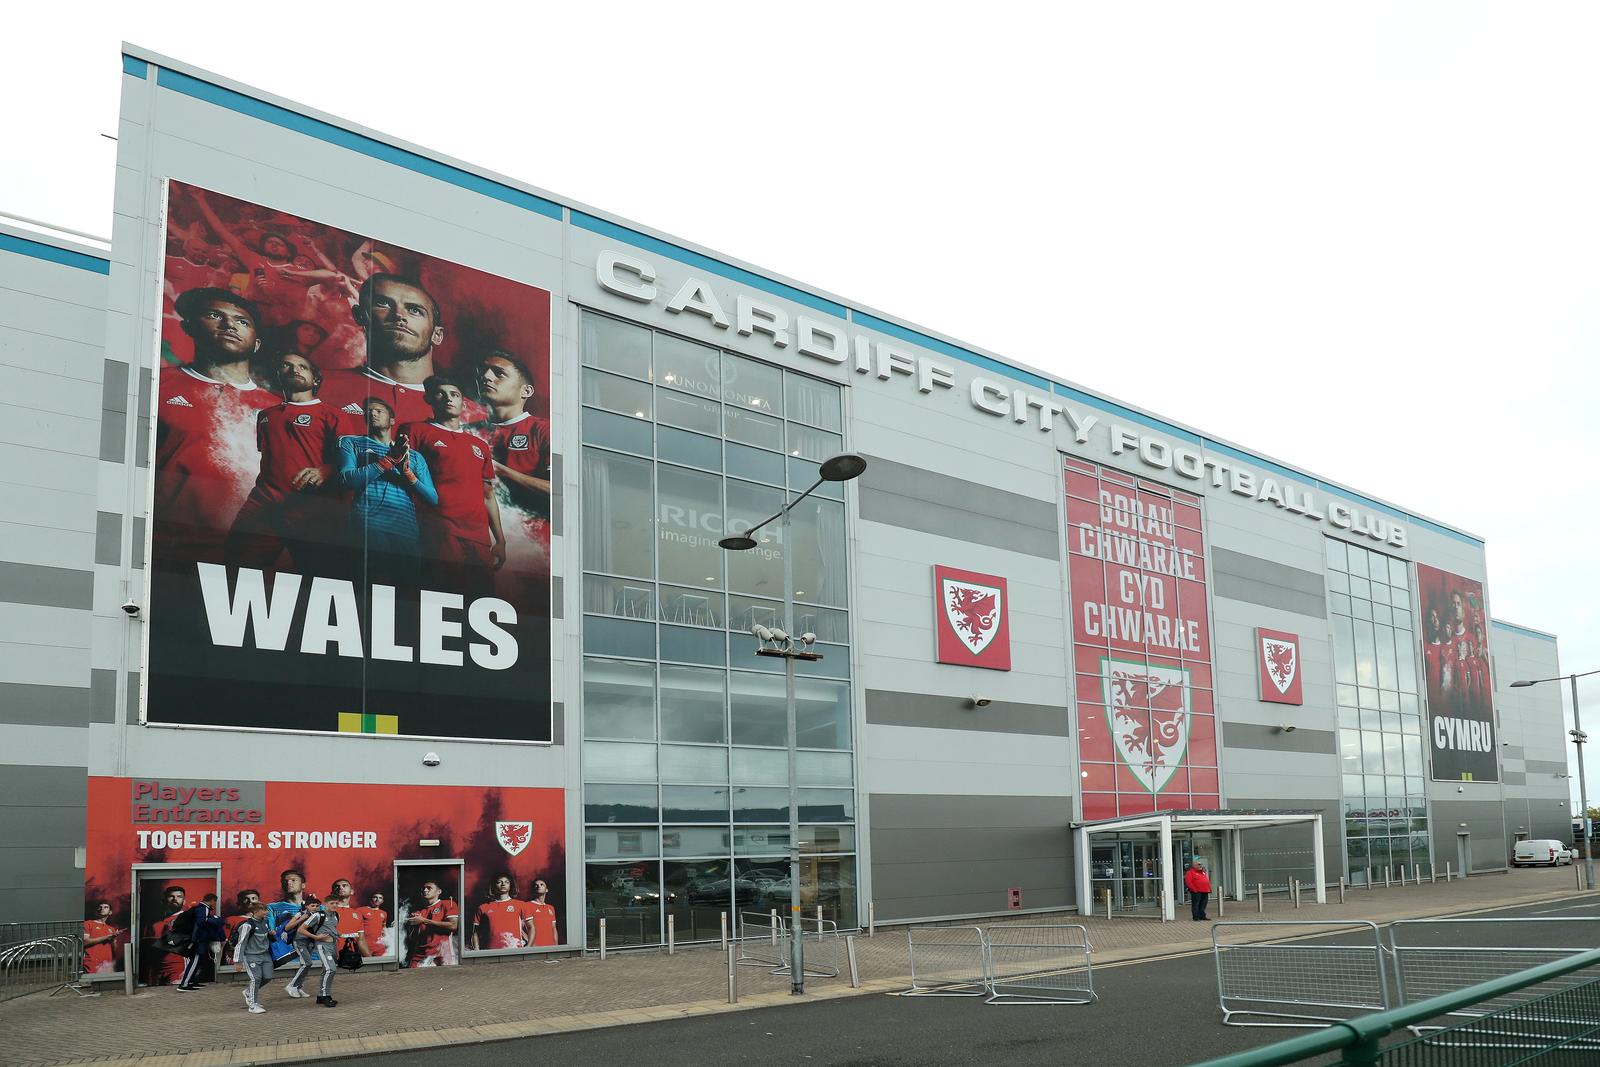 12.10.2019., Stadion Cardiff City, Cardiff, Wales - Stadion Cardiff City na kojem će igrati Hrvatska protiv Walesa. Photo: Sanjin Strukic/PIXSELL